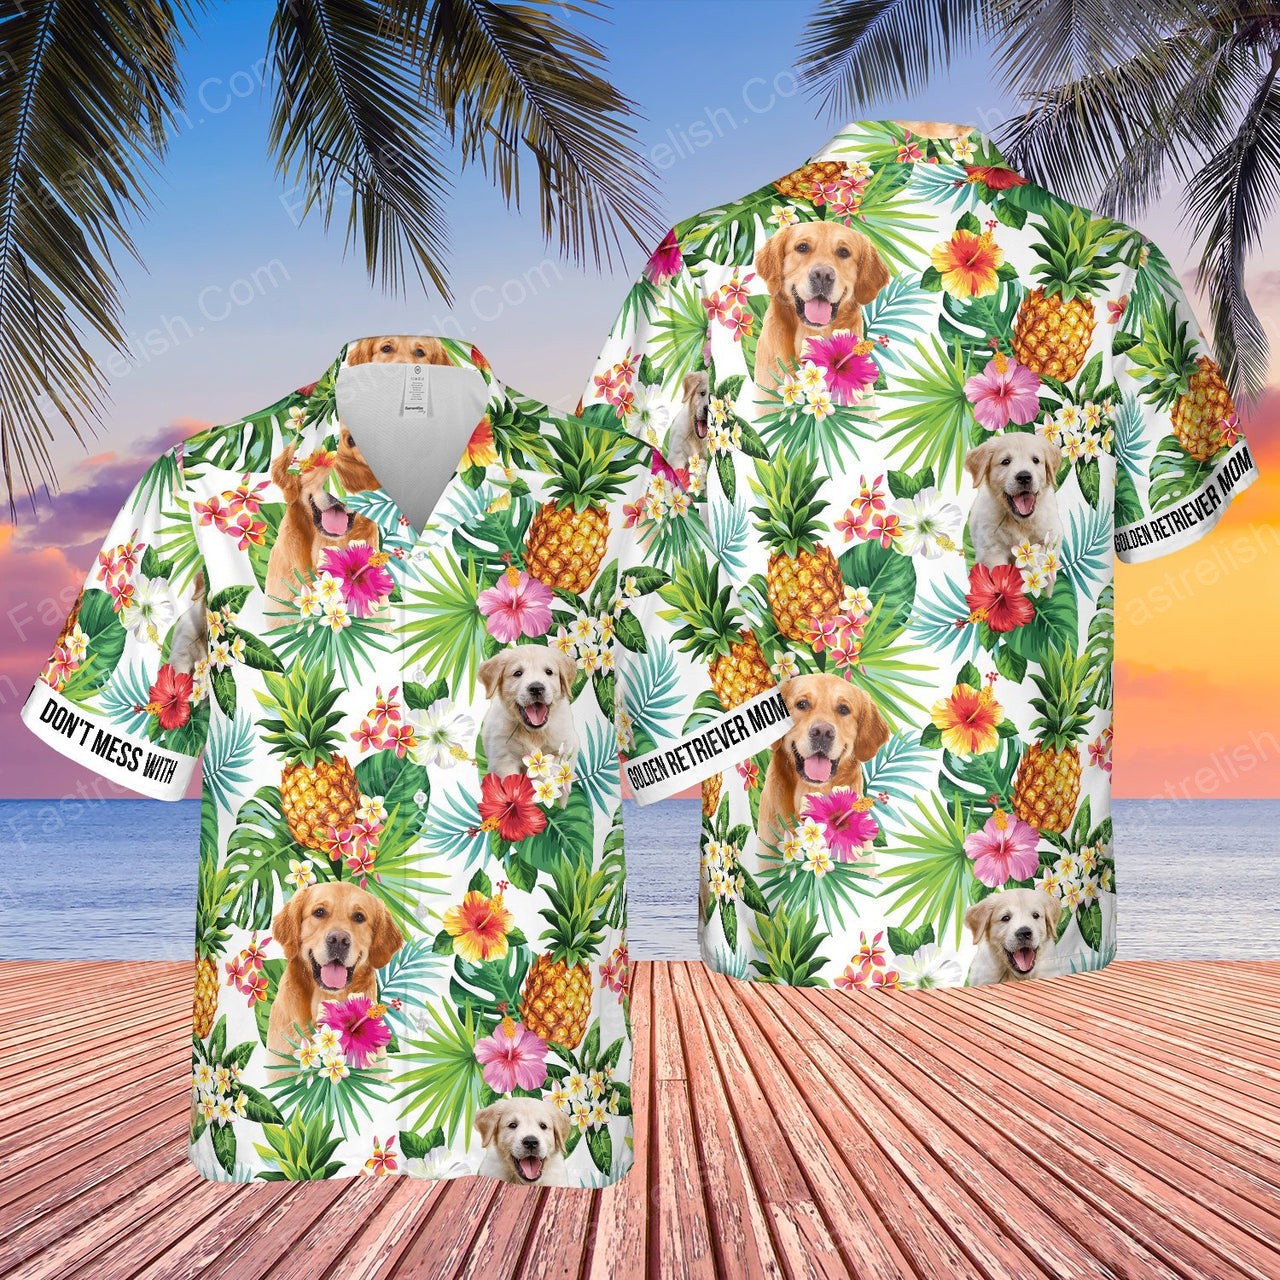 Don't Mess With Golden Retriever Mom Pineapple Hawaiian Shirts |HW8713